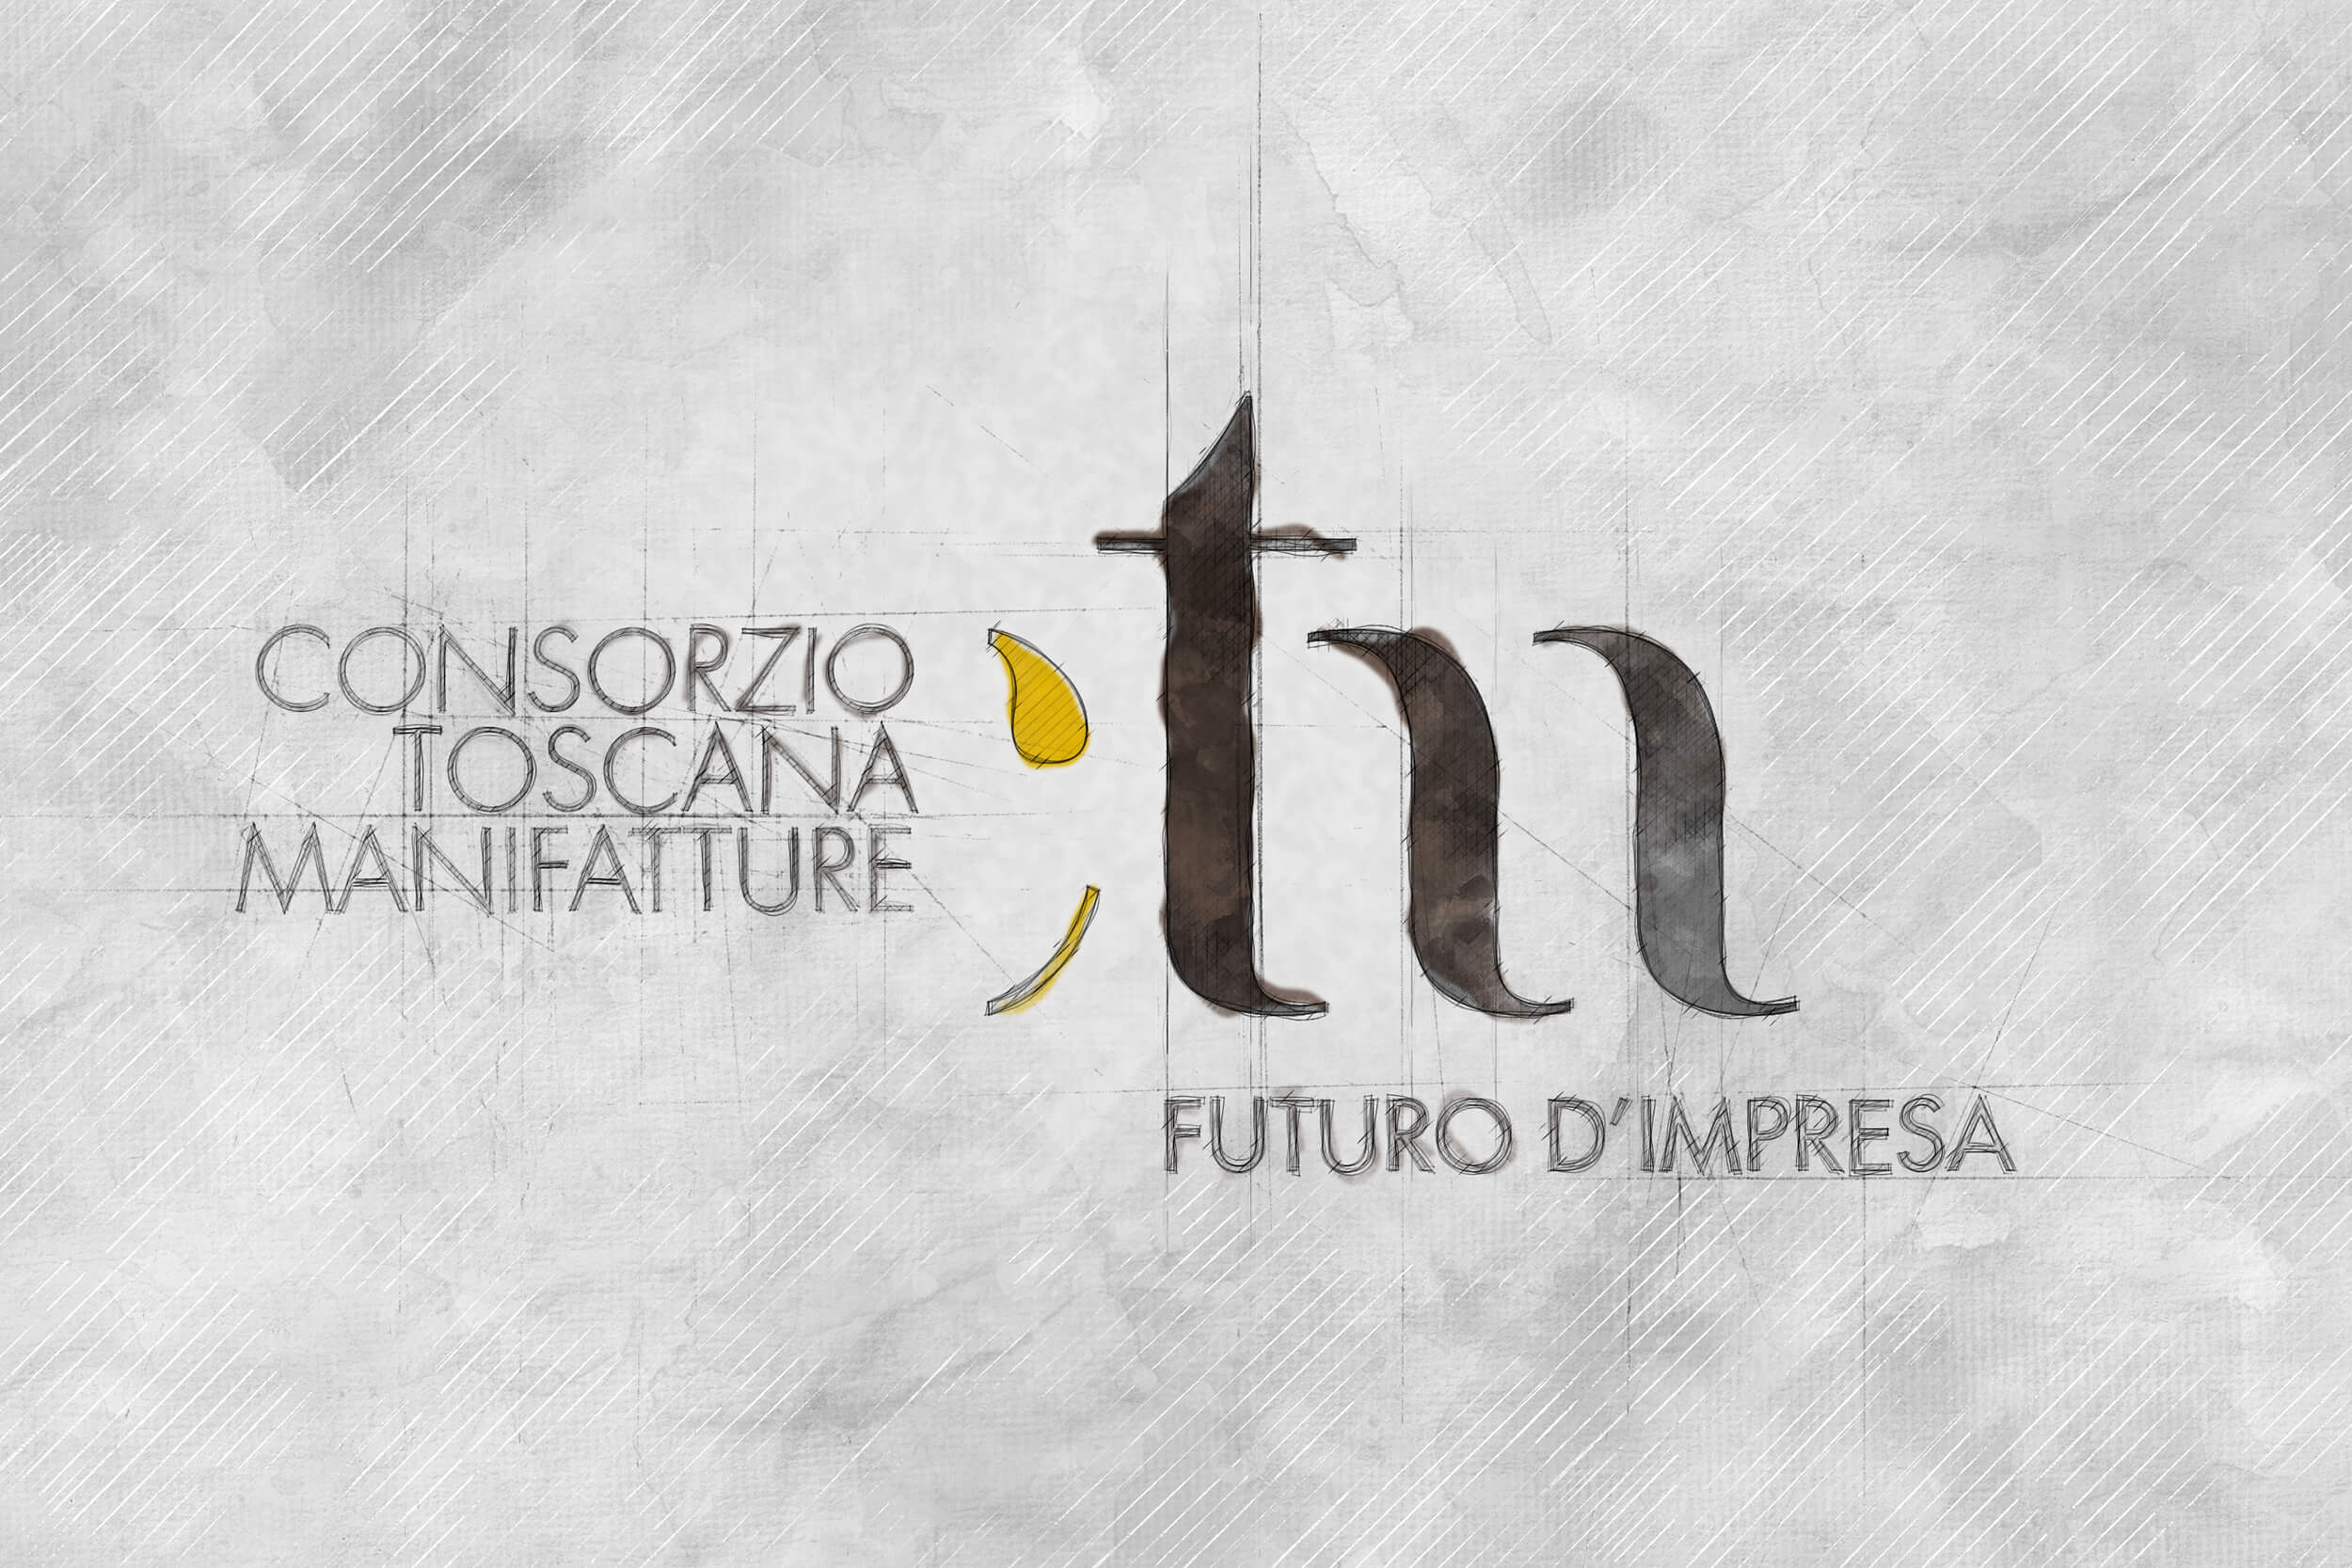 Consorzio Toscana Manifatture